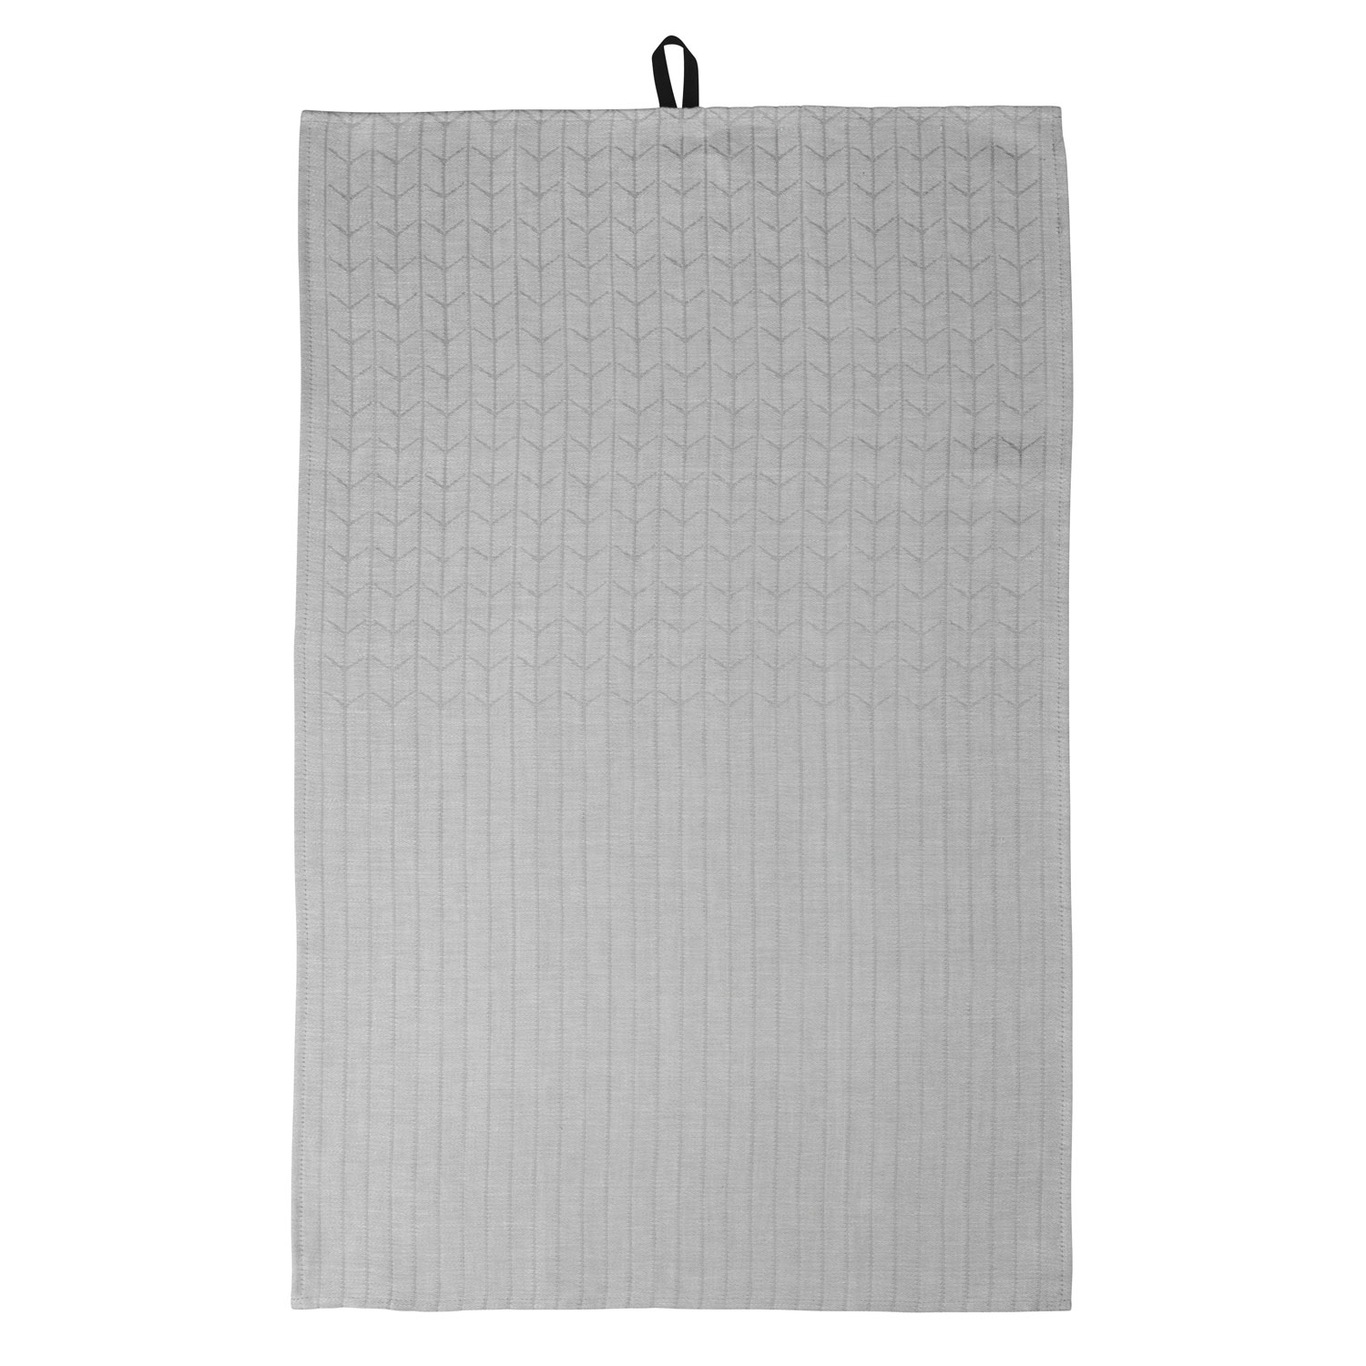 Swedish Grace Tea Towel 47x70 cm, Fog (Light Grey)